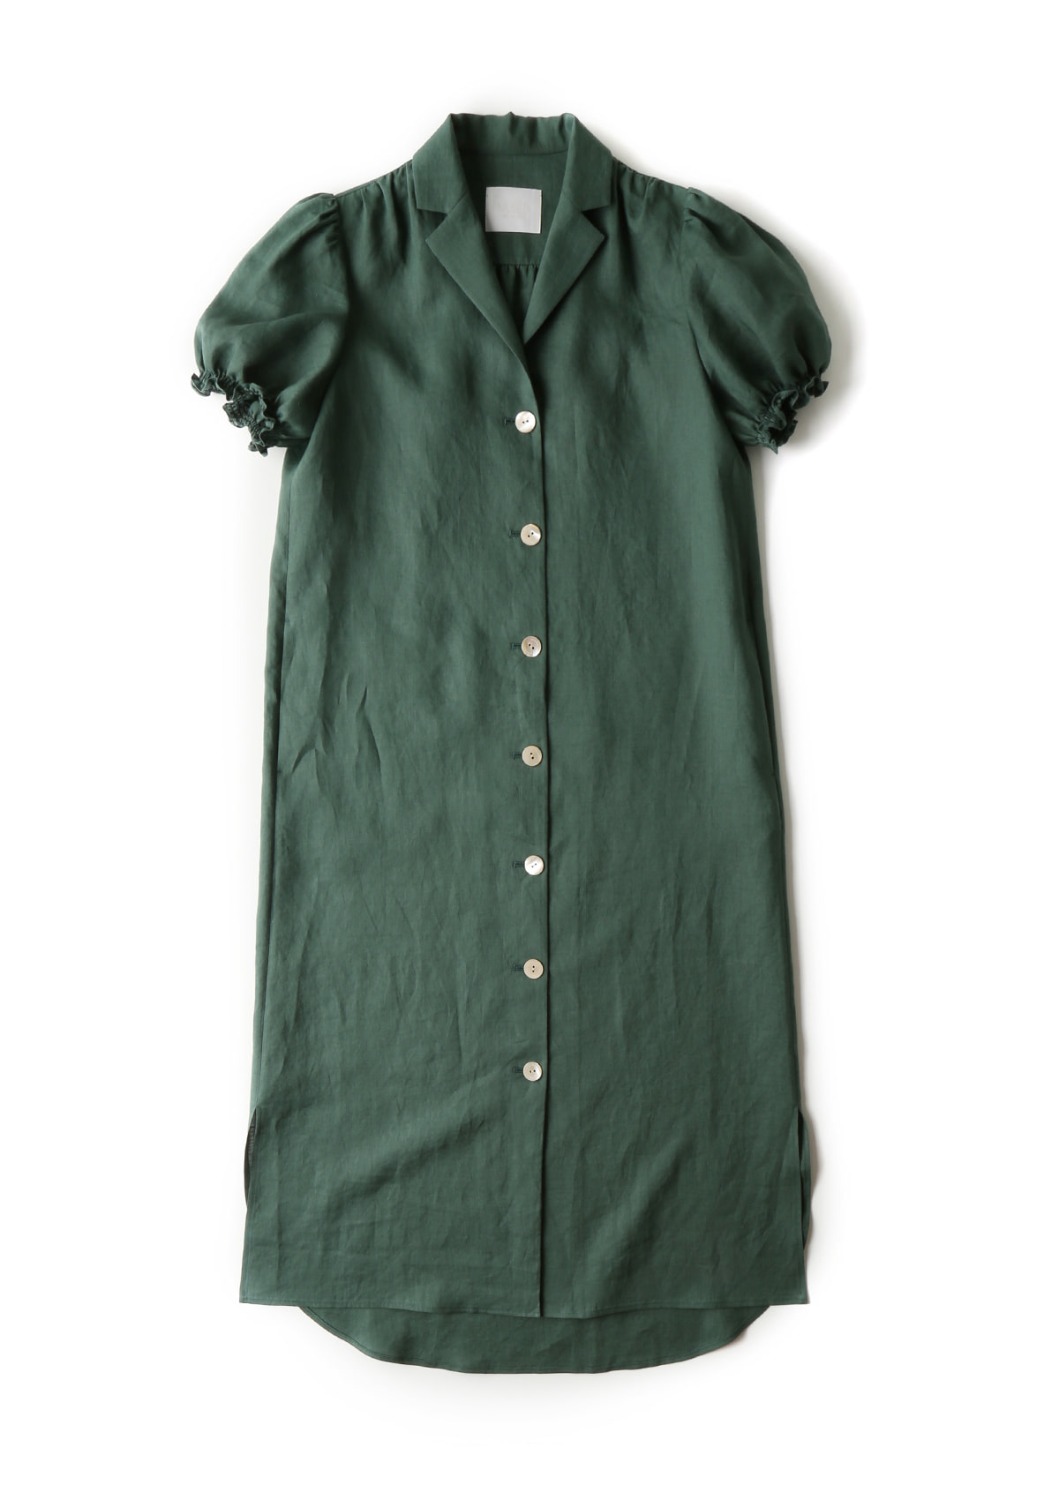 Vintage Retro Dress - Forest Green Linen